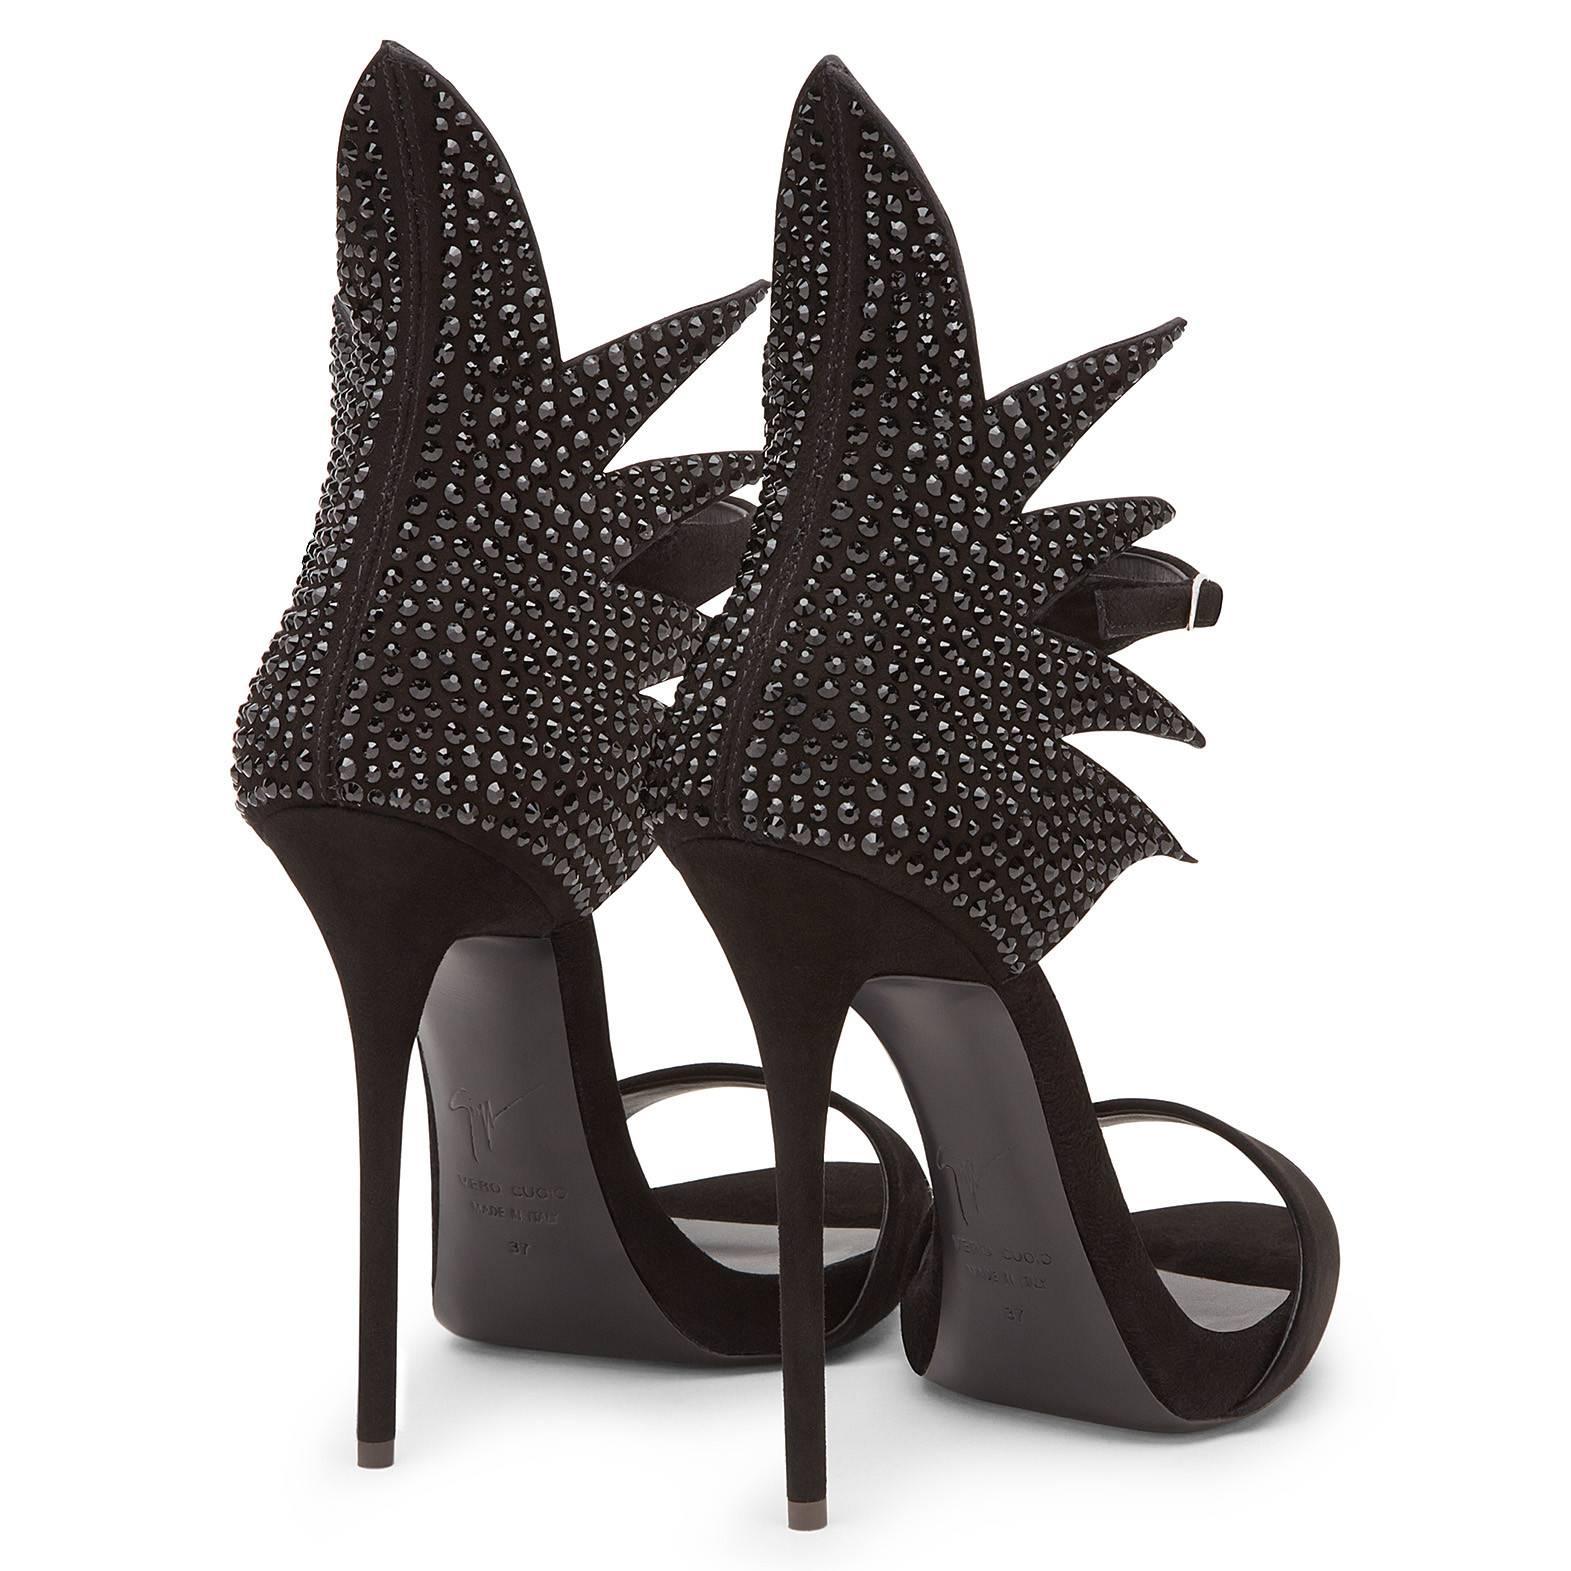 Women's Giuseppe Zanotti New Black Suede Crystal Evening Sandals Heels in Box 